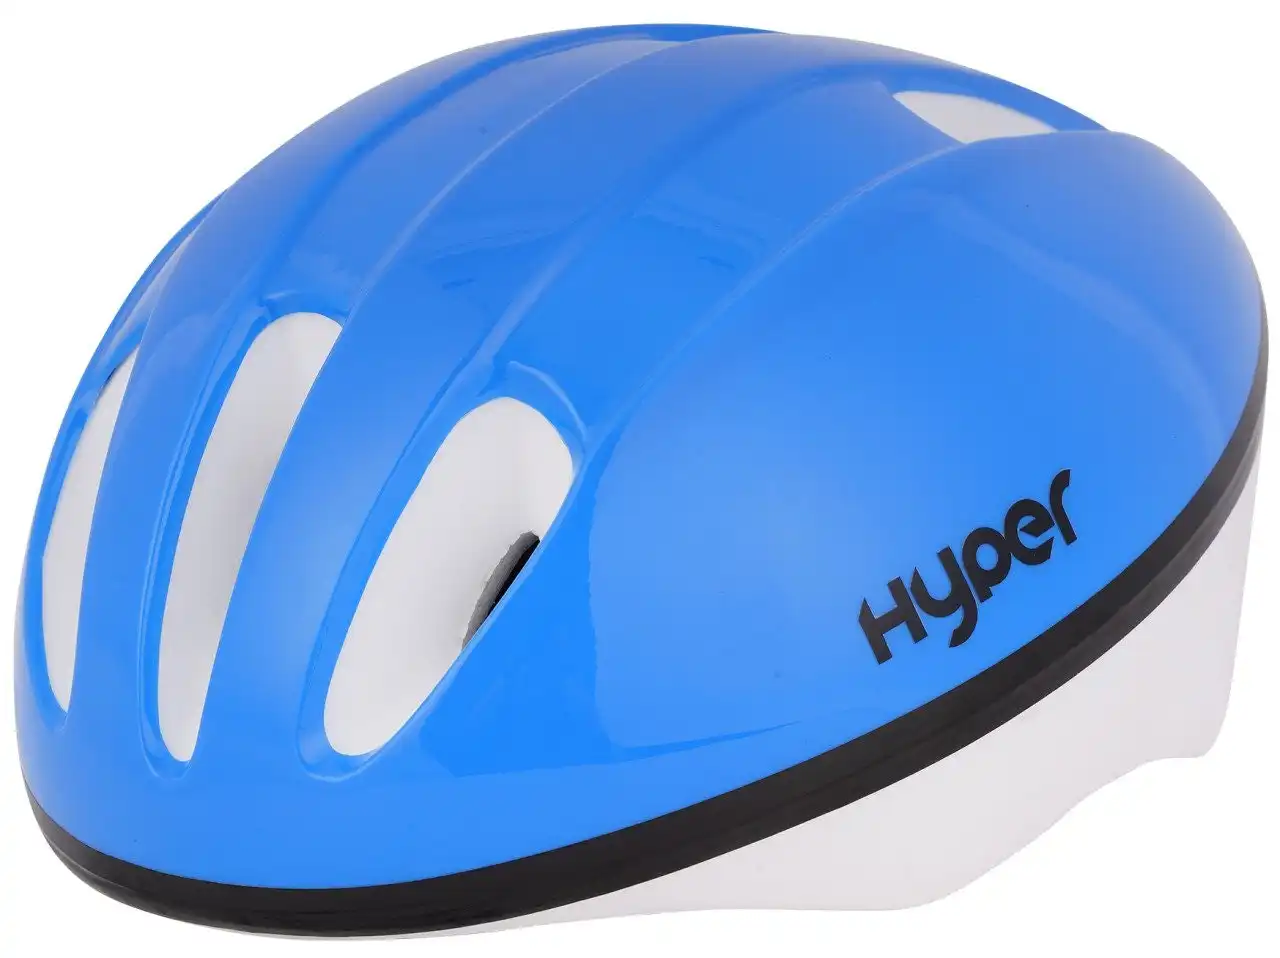 Kids Bike Helmet 54-58Cm W/Dial Fit - Blue